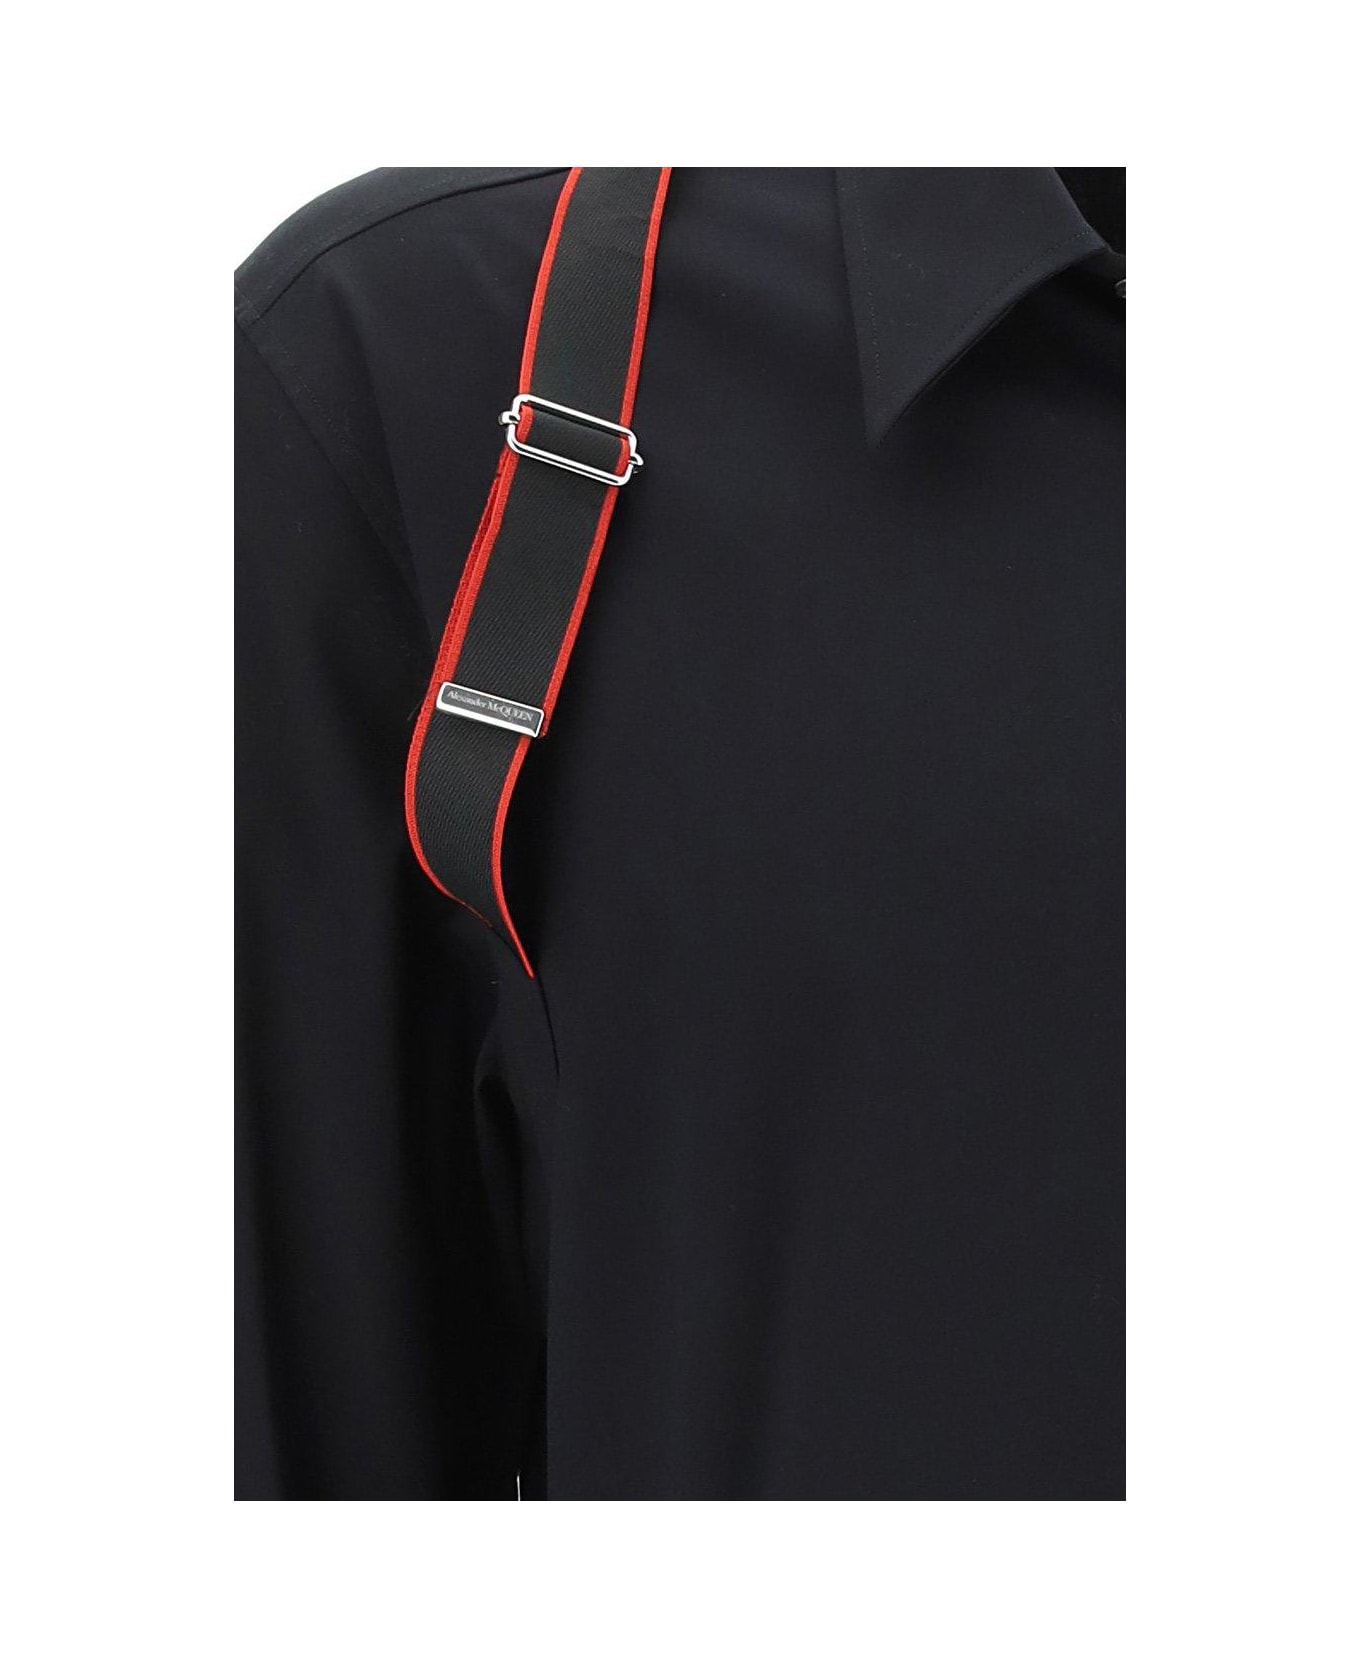 Alexander McQueen Shirt With Harness Detail - Black